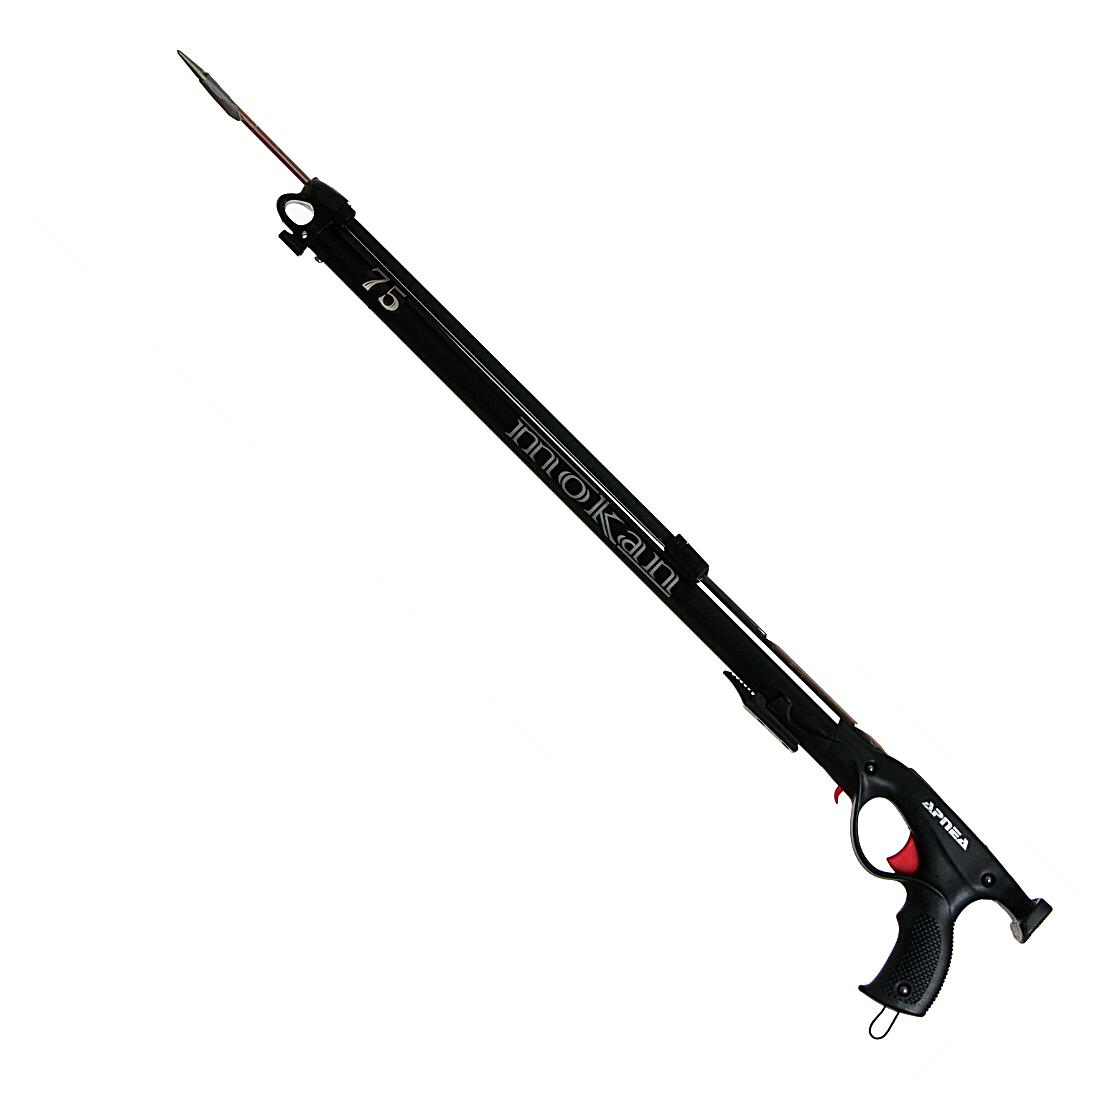 https://spearfishingstore.co.uk/wp-content/uploads/2021/10/apnea-mokan-classic-35cm-speargun-644-1-copy.png